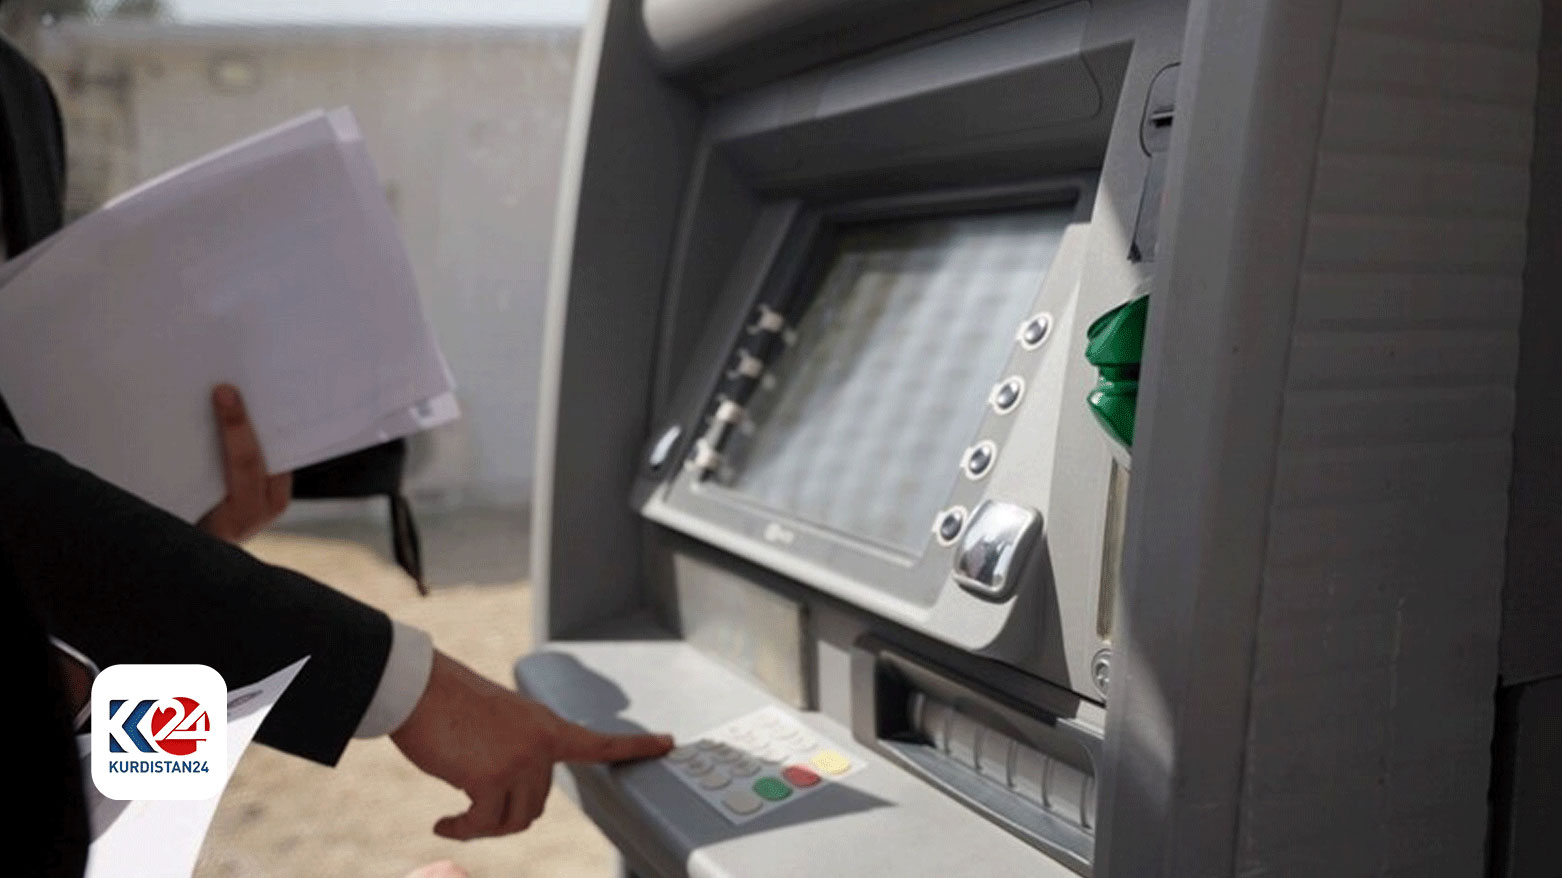 A customer accessing an ATM machine in the Kurdistan Region. (Photo: Kurdistan 24)